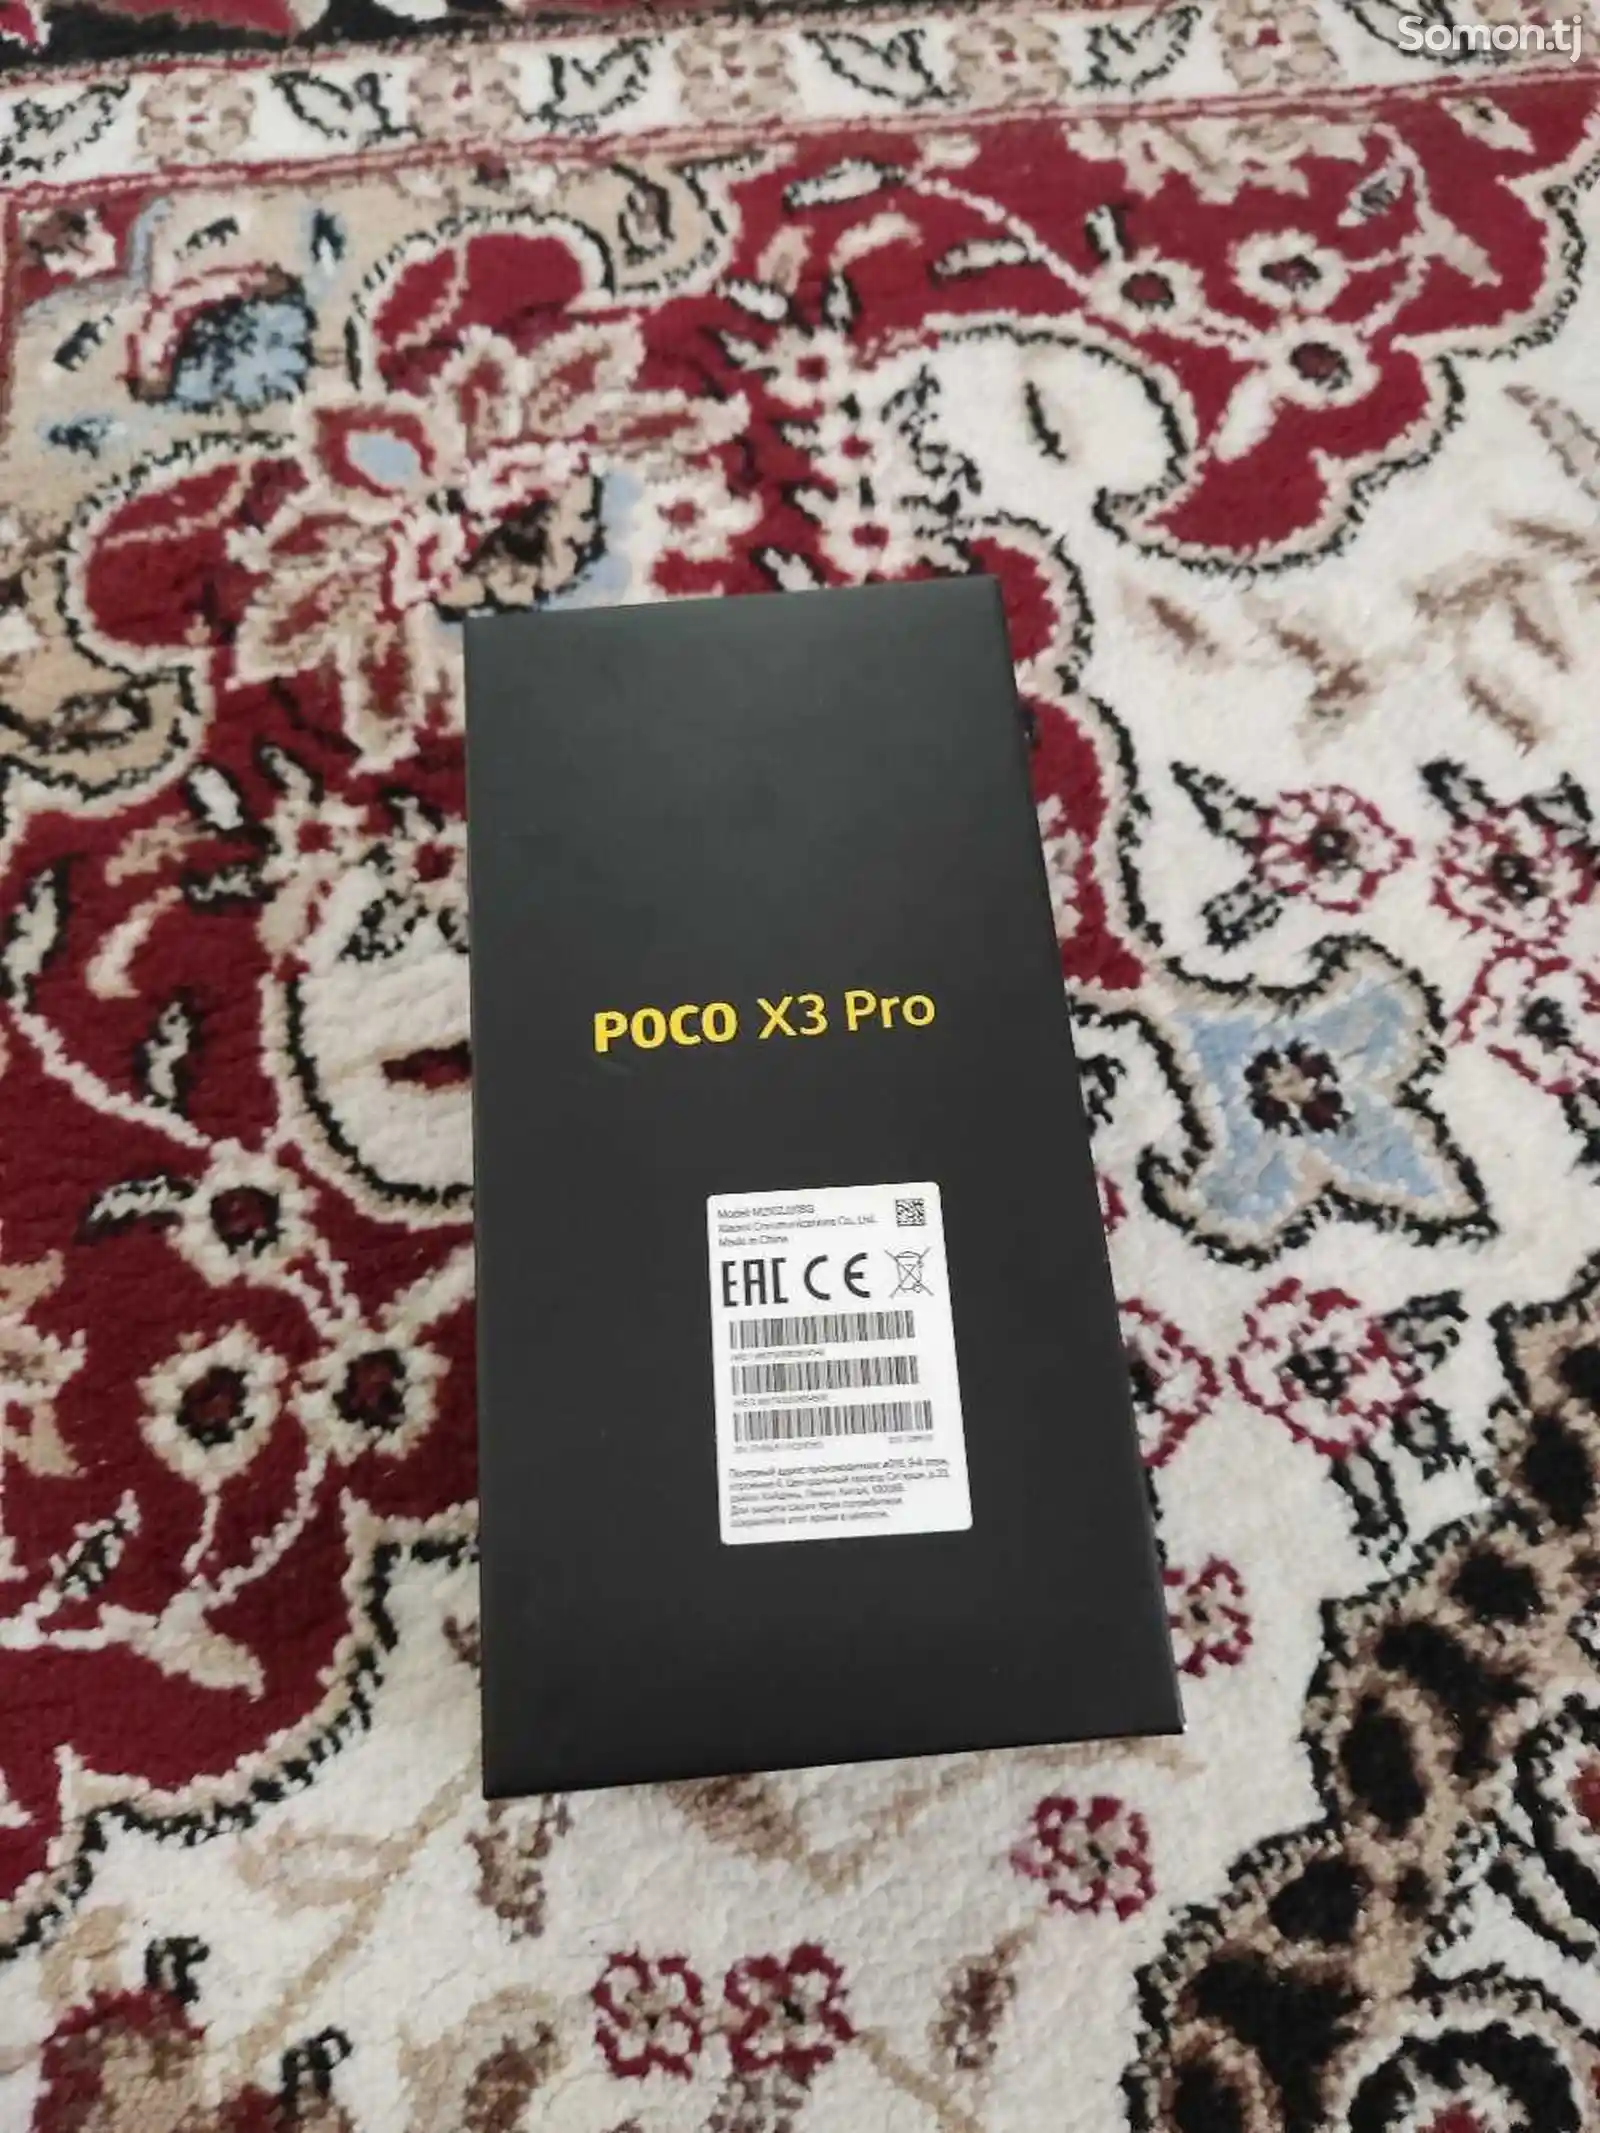 Xiaomi Рoco x3 pro-5